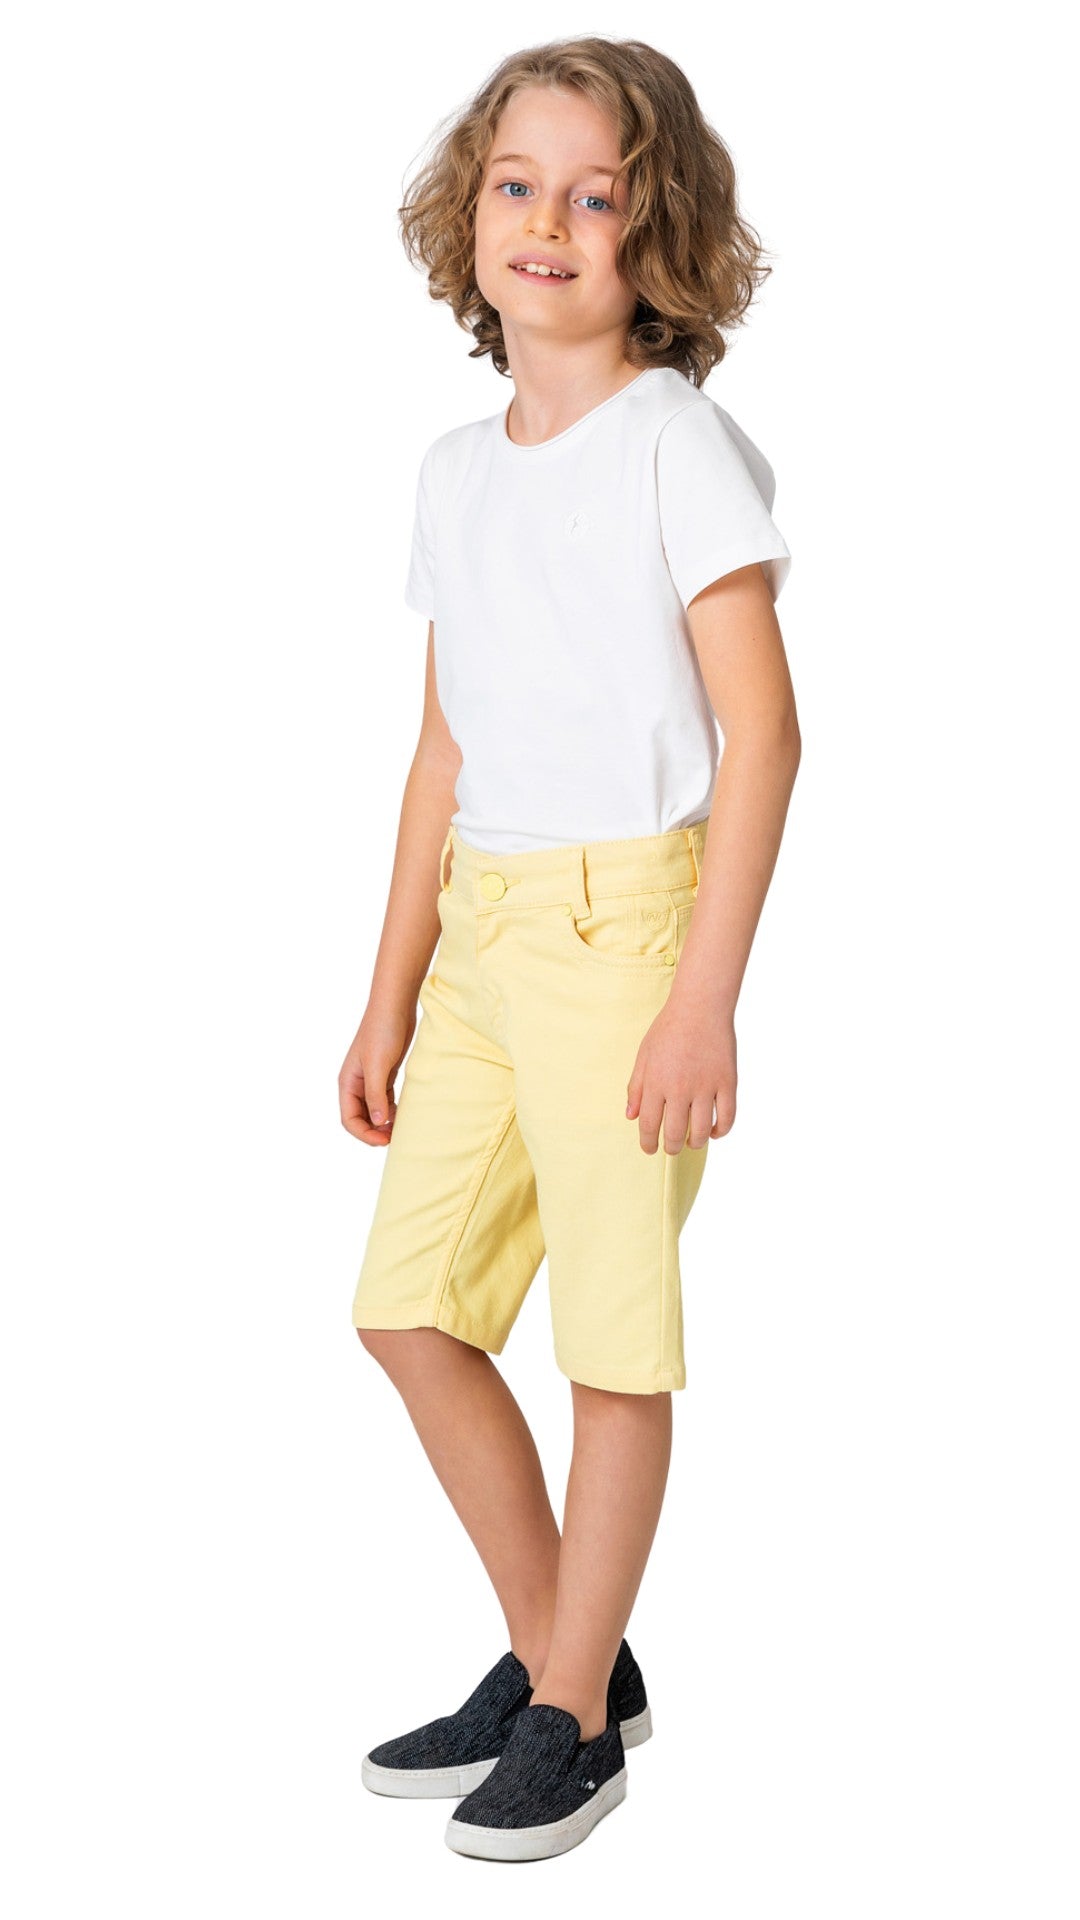 InCity Boys Tween 7-14 Years Regular Fit Casual Cotton Lanarc Shorts InCity Boys Girls